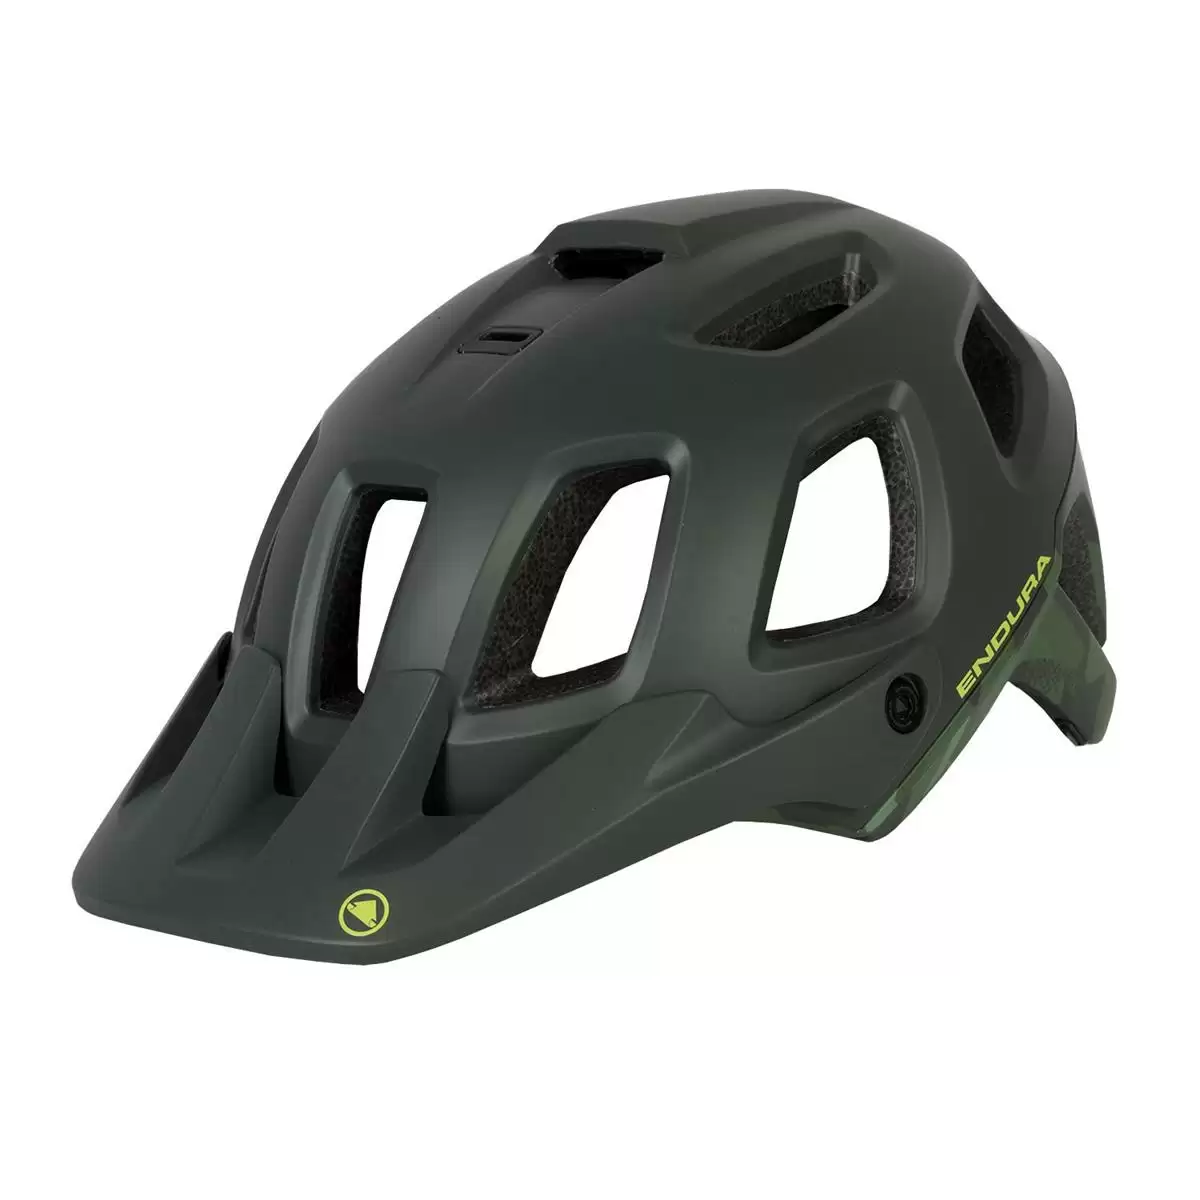 helmet SingleTrack Helmet II green size L/XL (58-63cm) - image